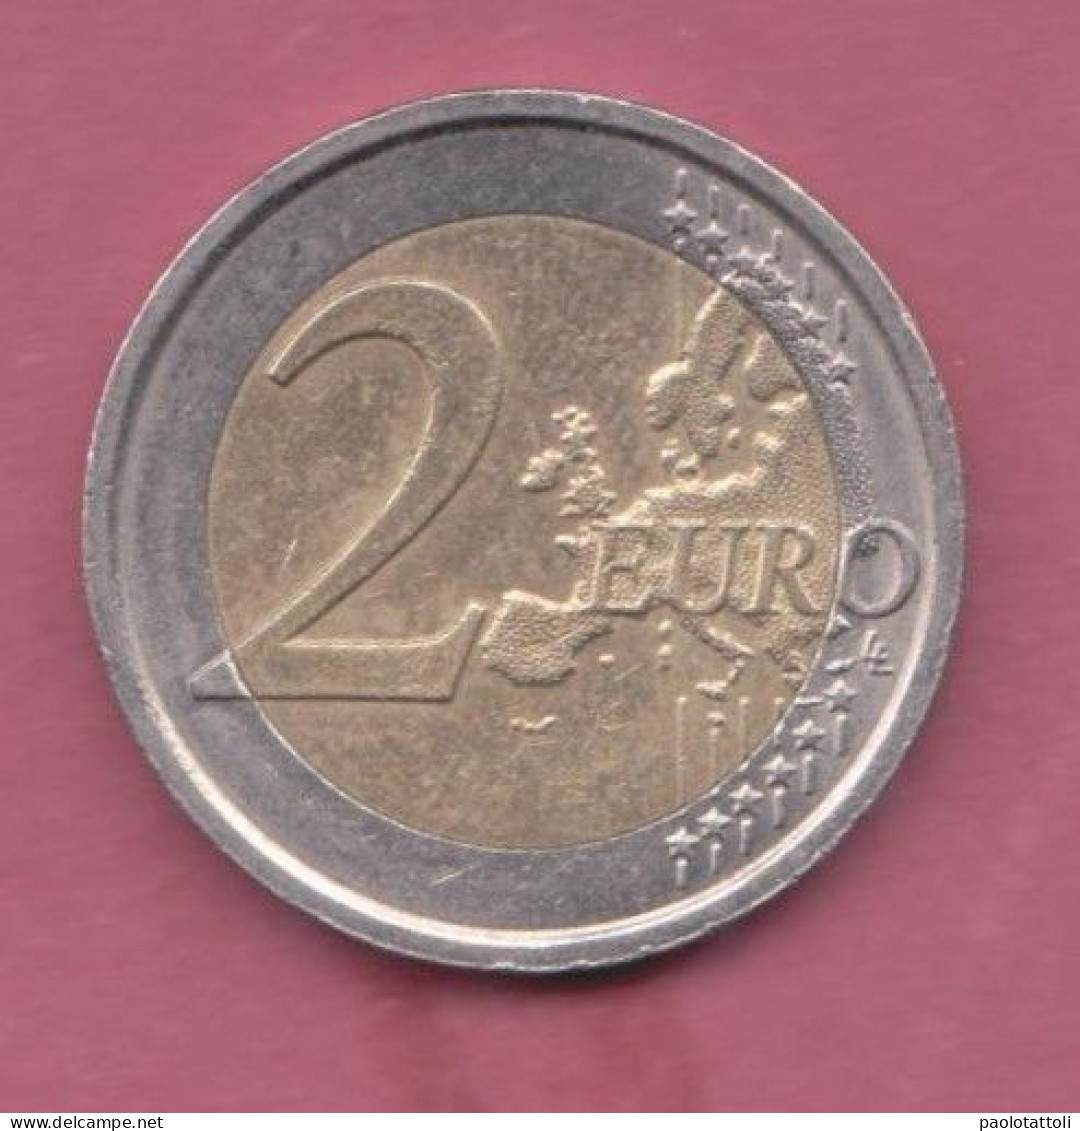 Italia, 2020- 2 Euro, Montessori- Circulating Commemorative Coin- Bimetallic Nickel Brass Clad Nickel Center In Copper-n - Italie